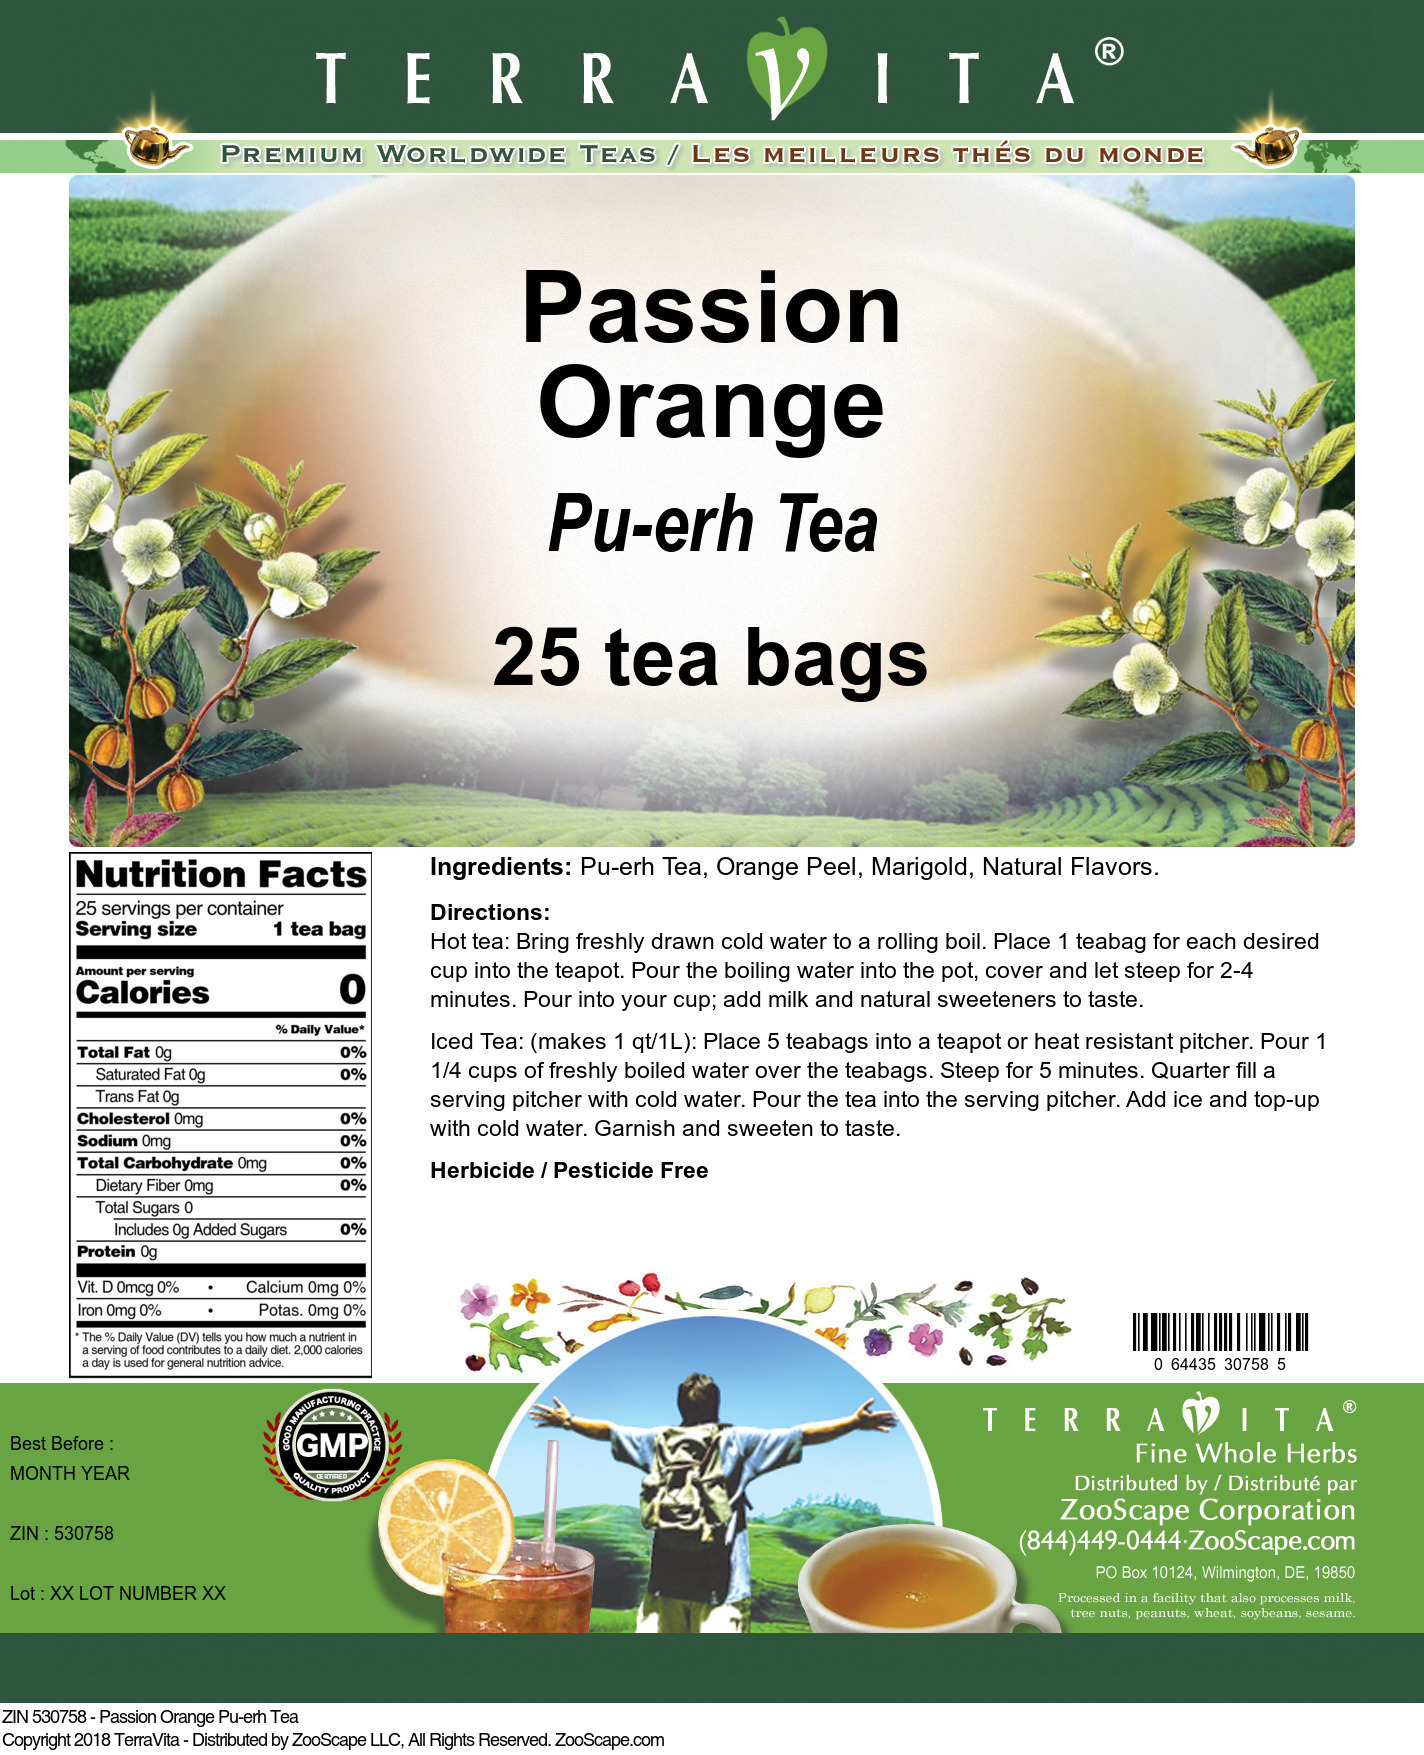 Passion Orange Pu-erh Tea - Label